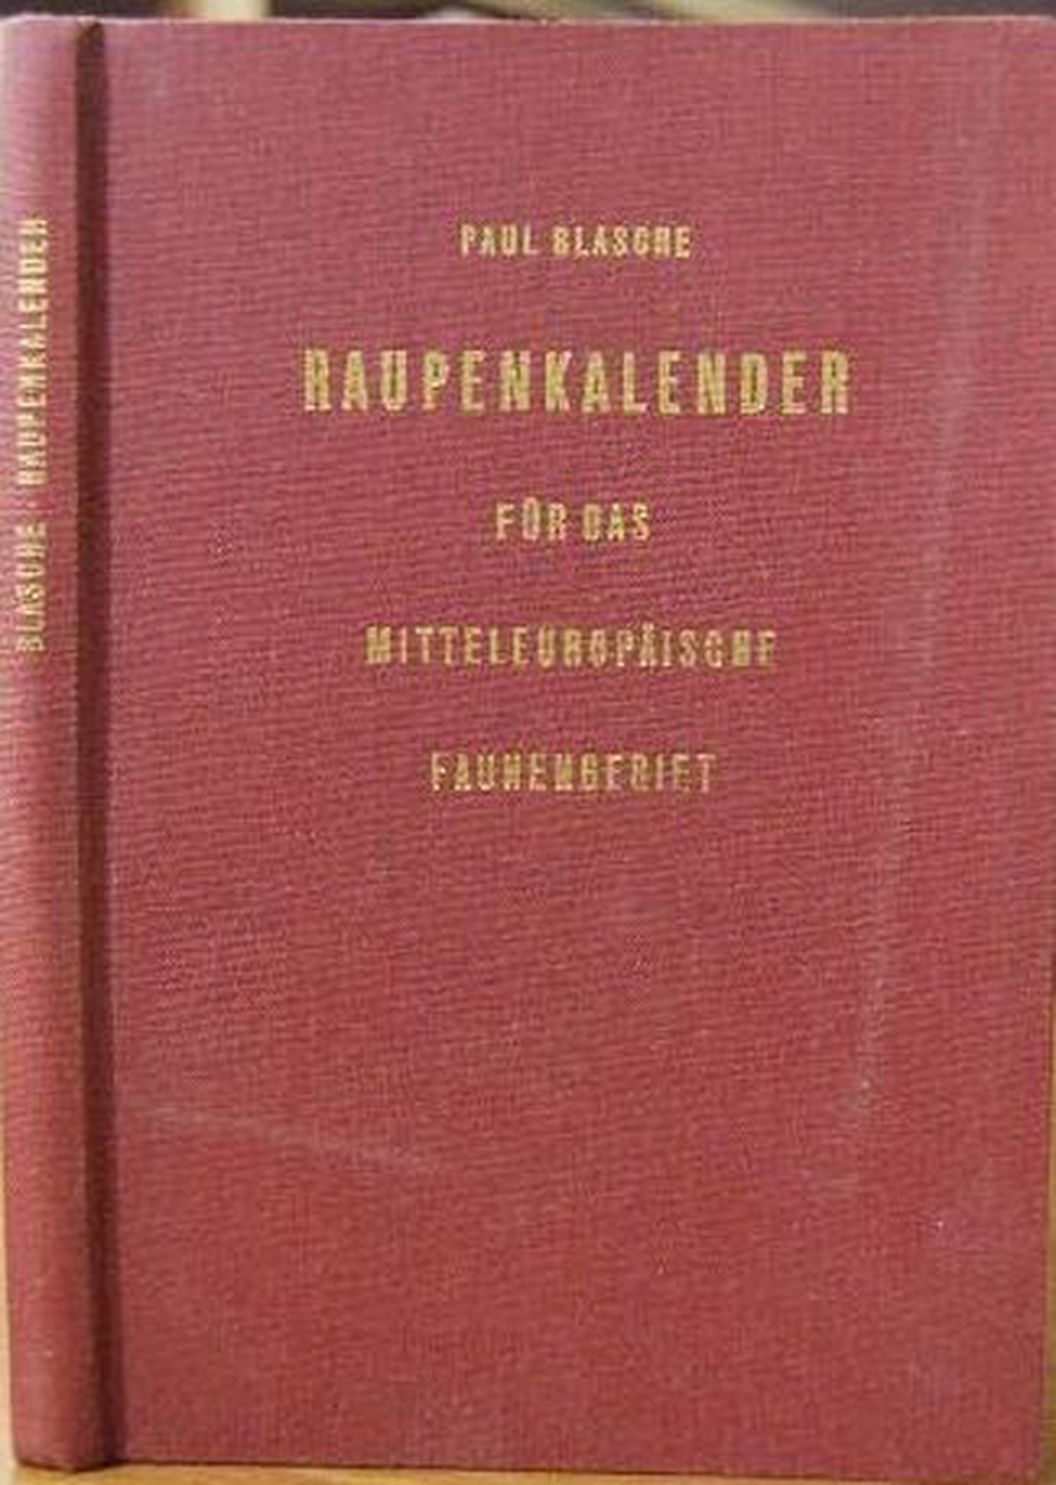 Paul Blasche: Raupenkalender für das mitteleuropäische Faunengebiet (Rippl-Rónai Múzeum RR-F)